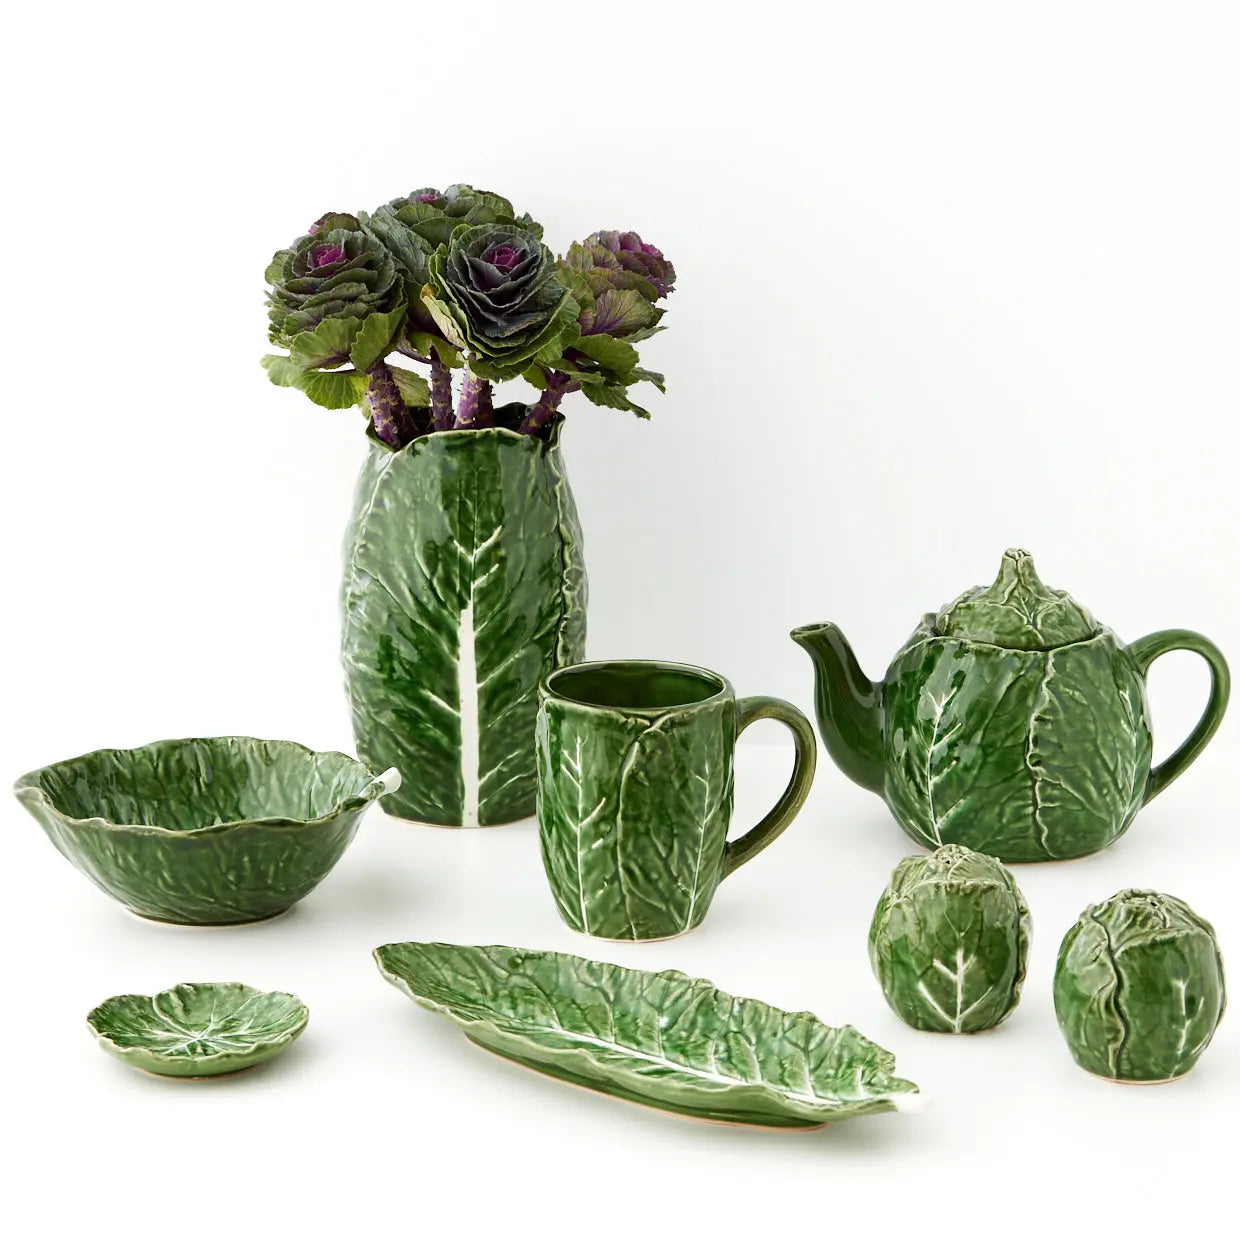 Cabbage Ceramic Vase Green - GigiandTom